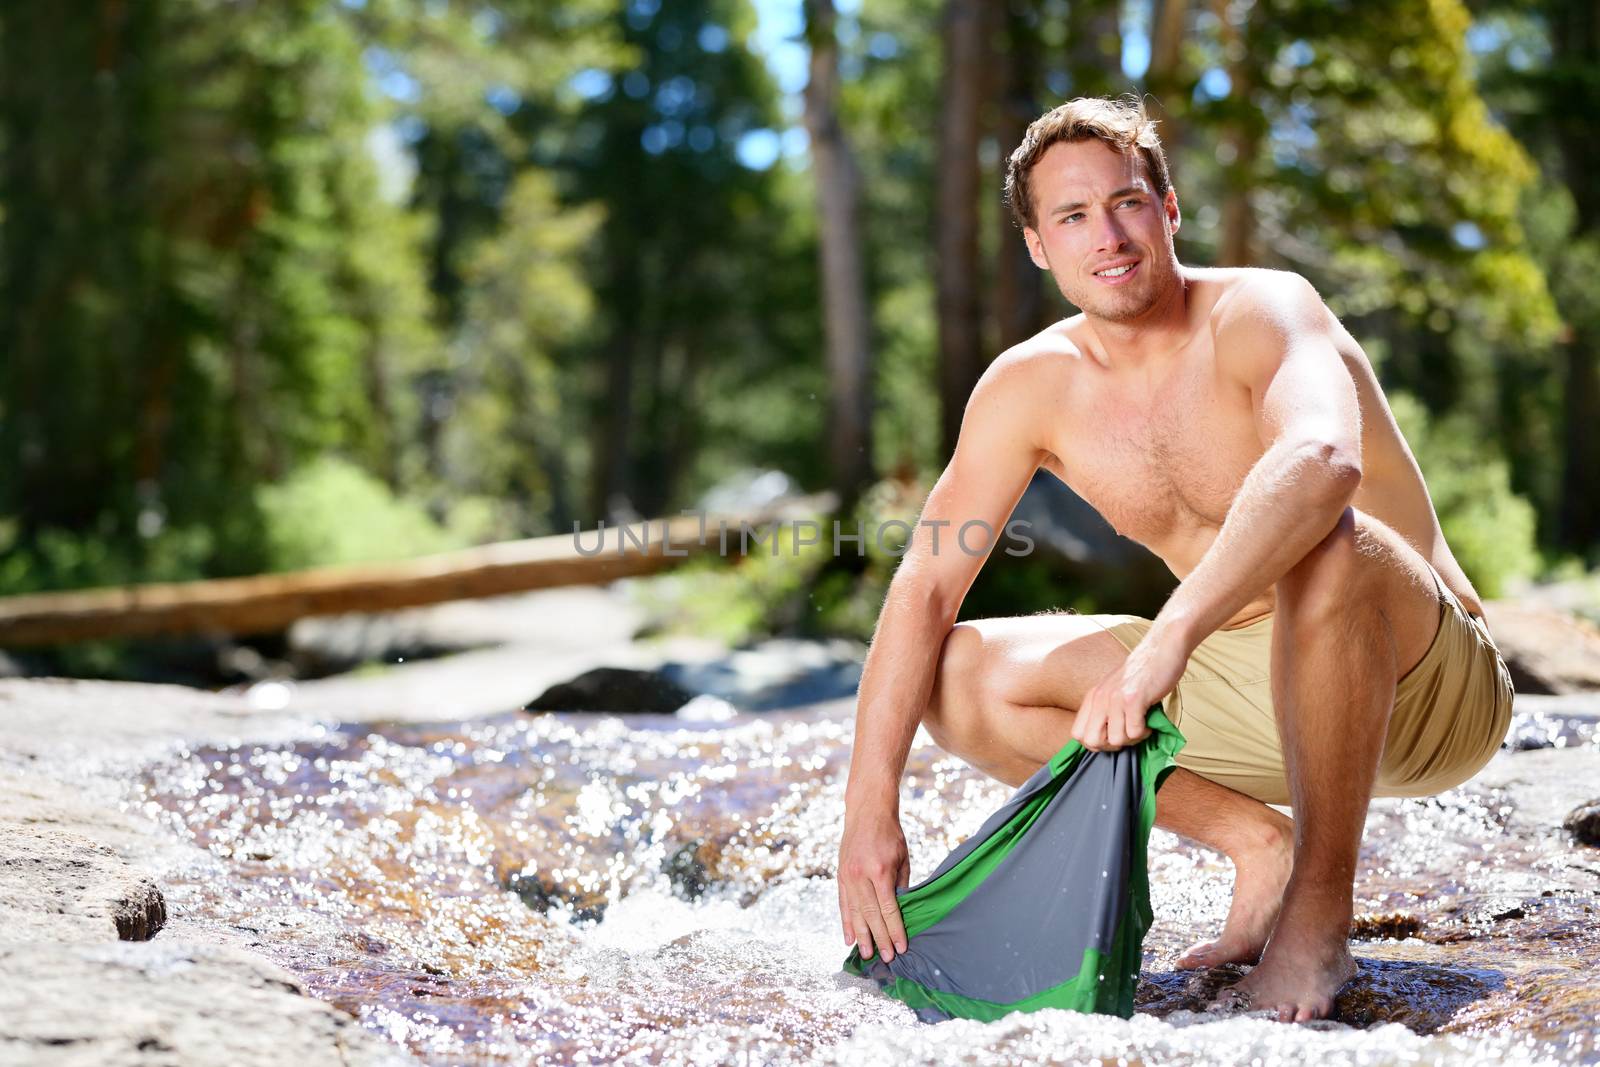 Camping hiker man on trek washing clothes in river by Maridav